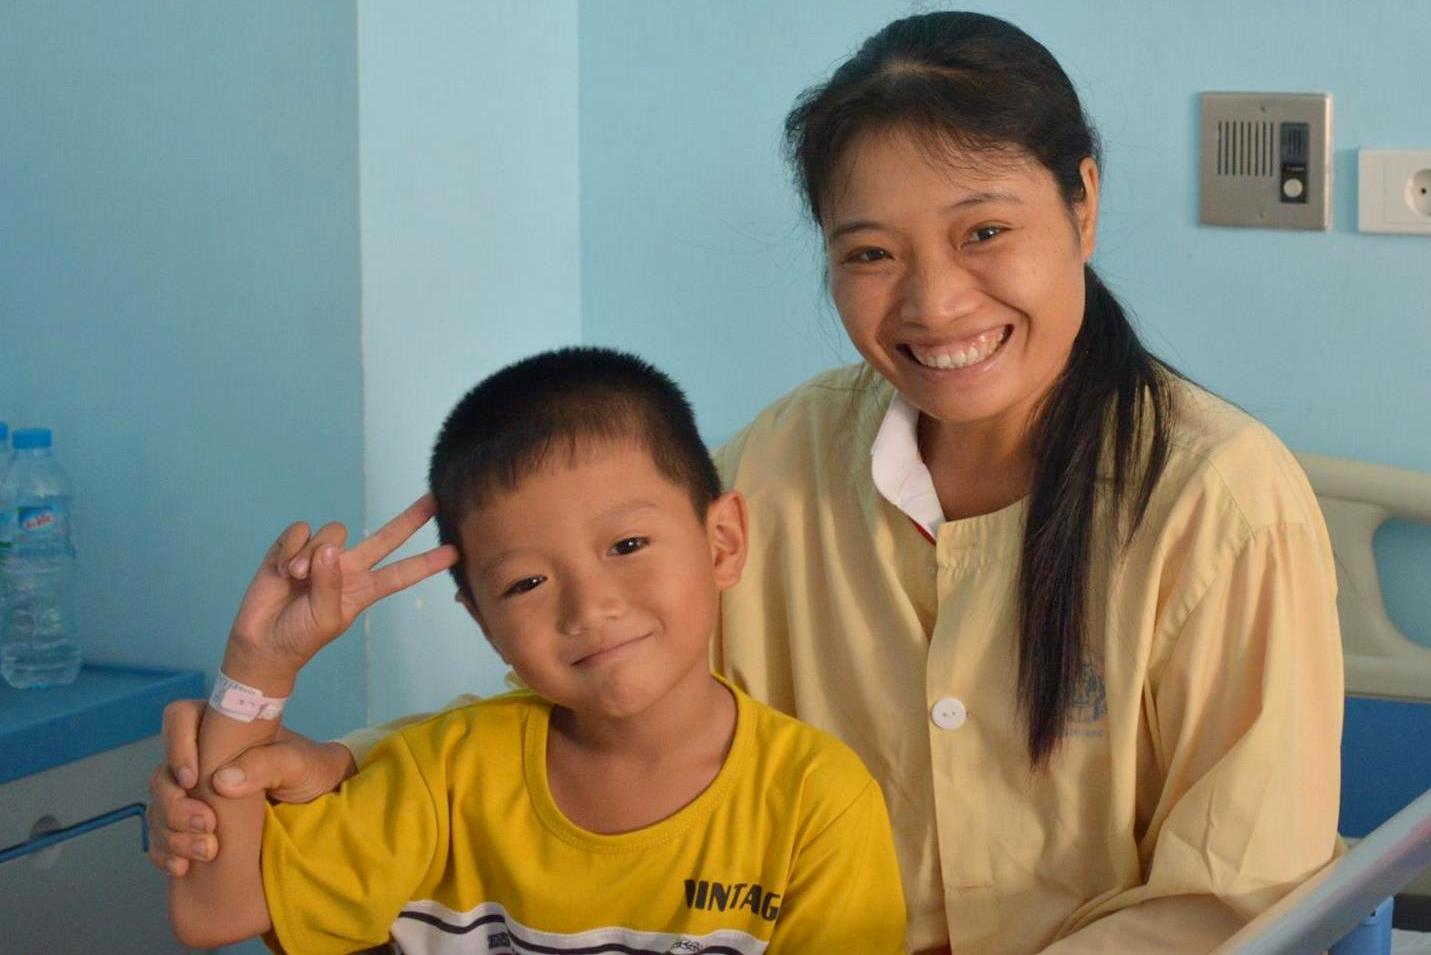 Kind cuts for kids DEK Foundation Vietnam hospital kids